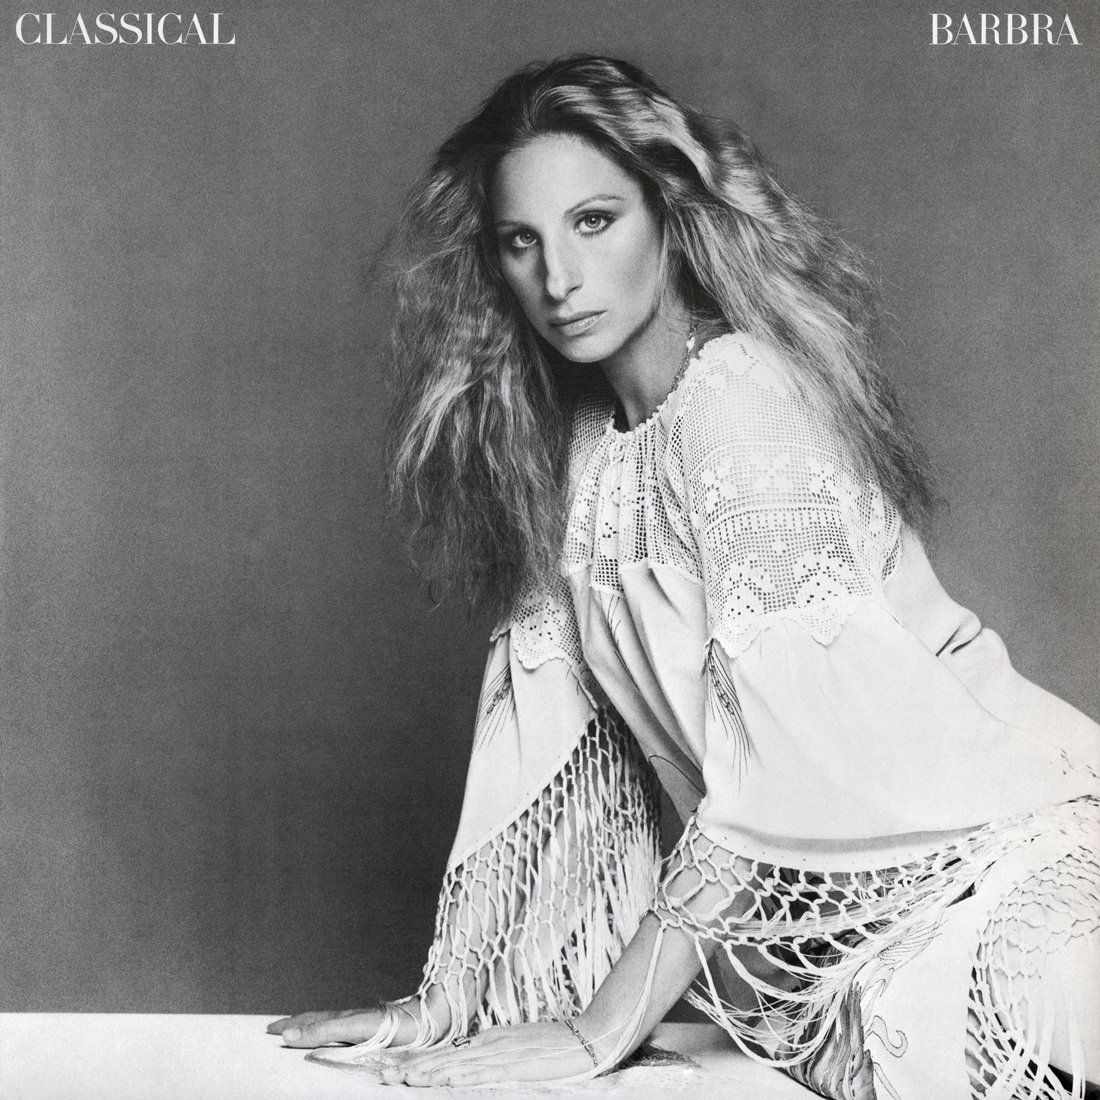 Classical Barbra - original album cover. Scan by Kevin Schlenker.